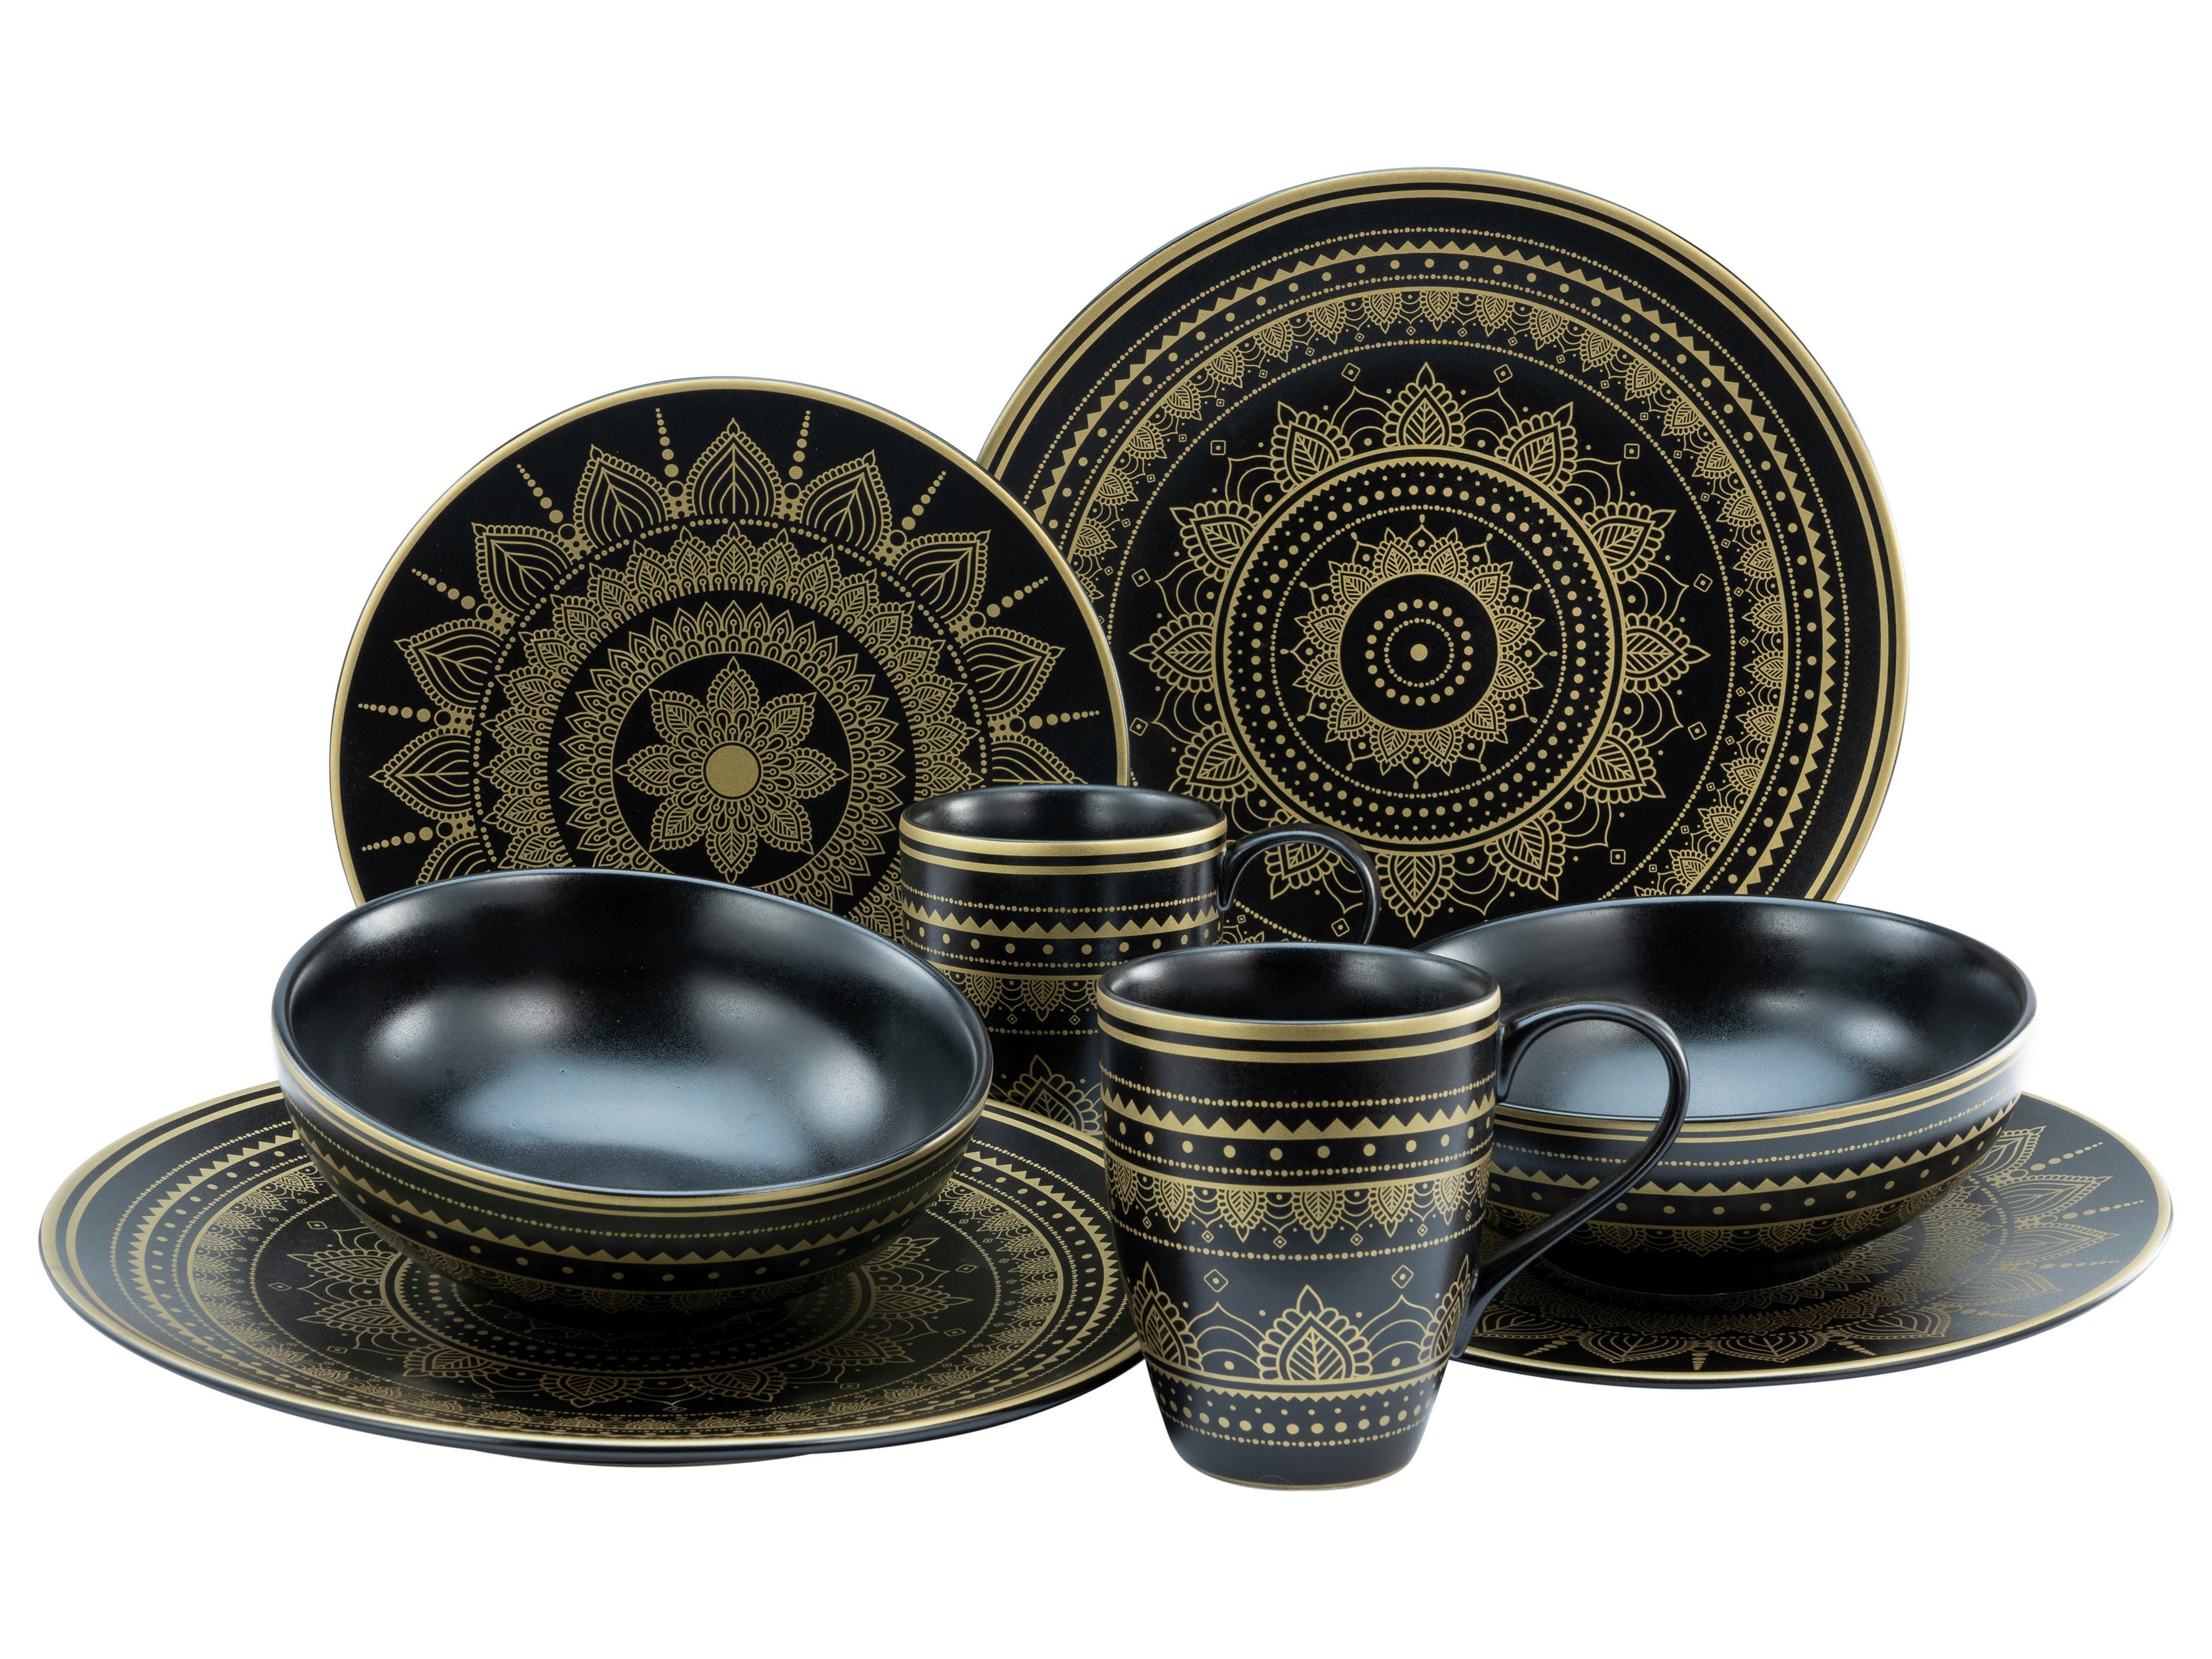 Kombinovaná Souprava 8-Dílná, Černá/zlatá - černá/barvy zlata, keramika (30/30/28,5cm) - Creatable